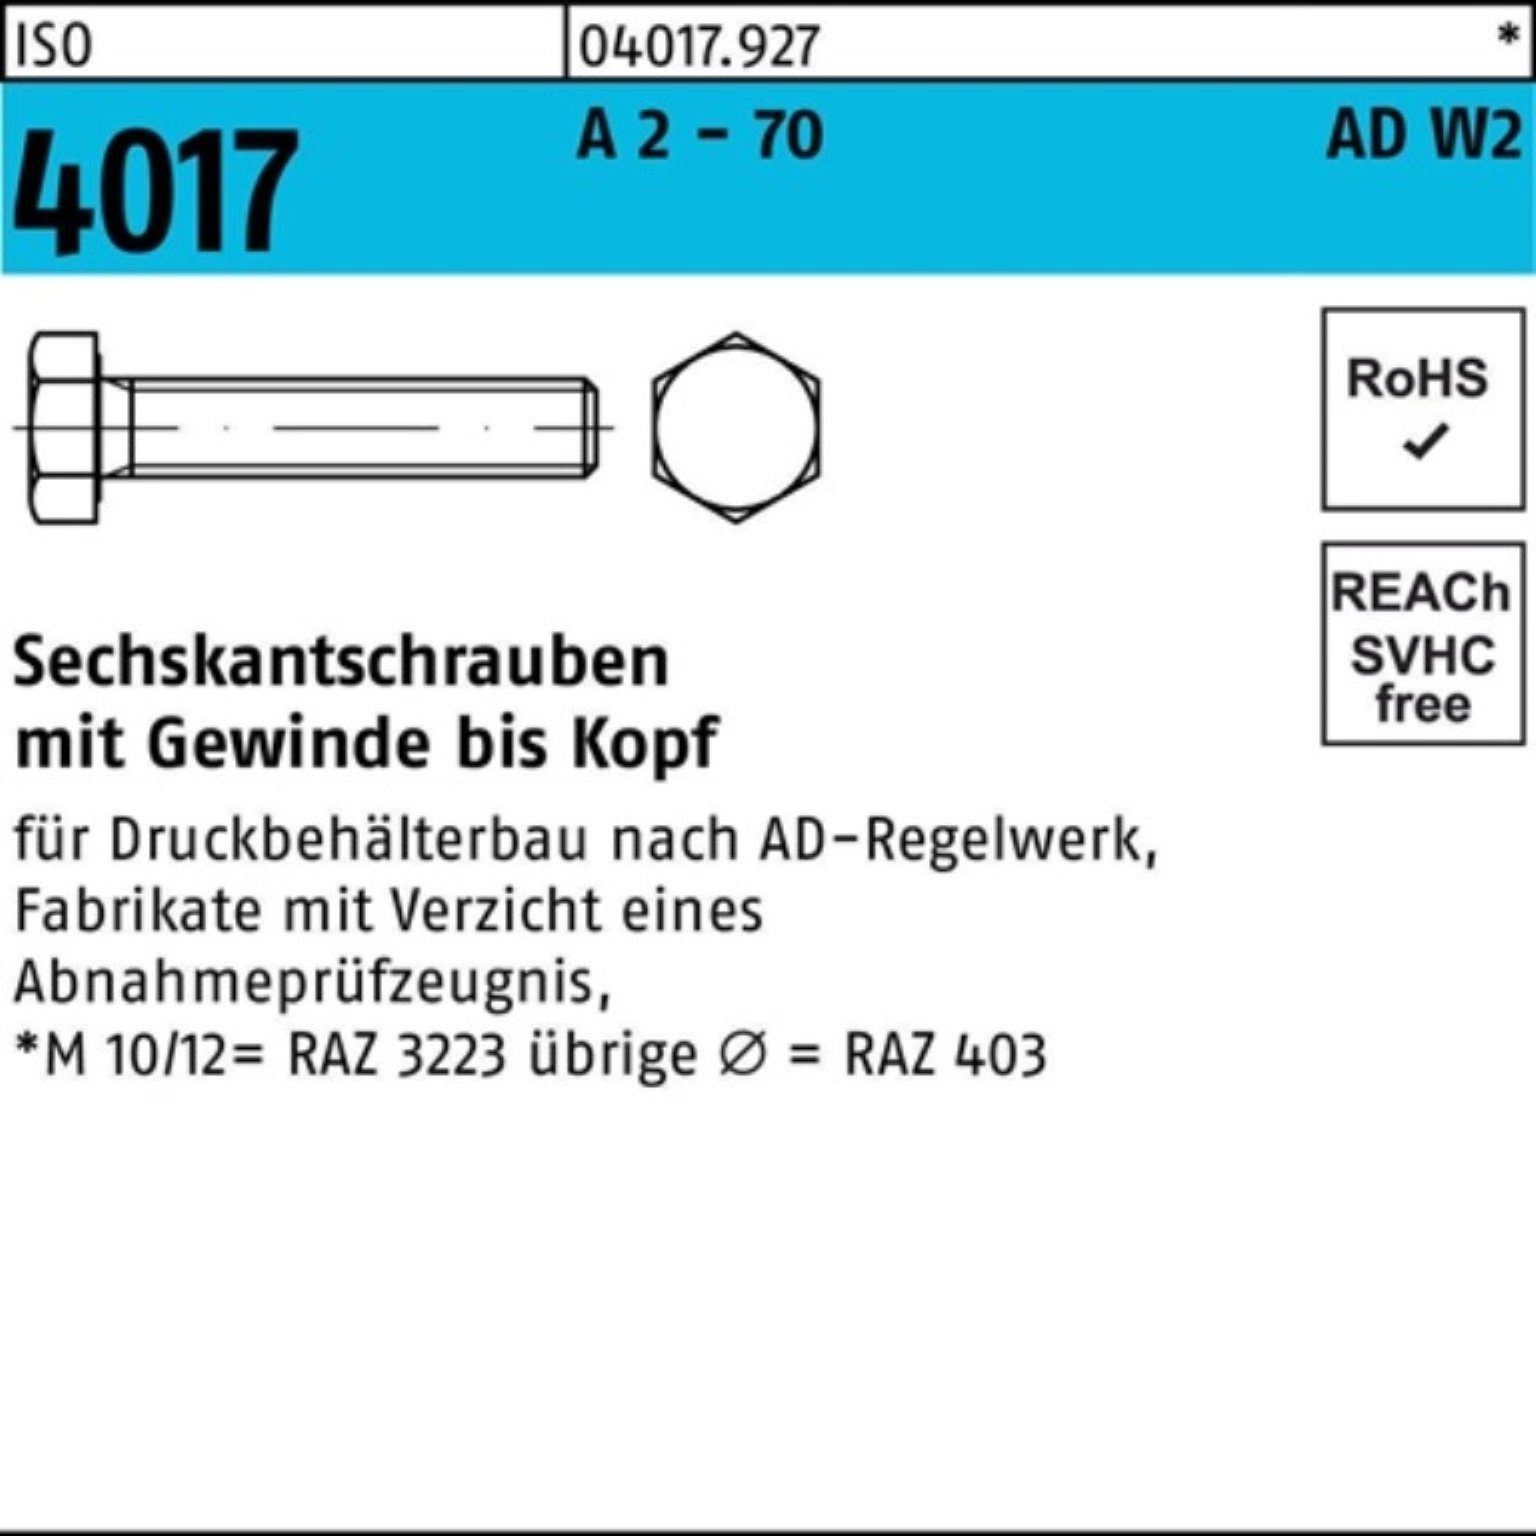 Bufab Sechskantschraube 100er AD-W2 VG 75 Sechskantschraube 25 Pack M12x ISO A - 70 4017 St 2